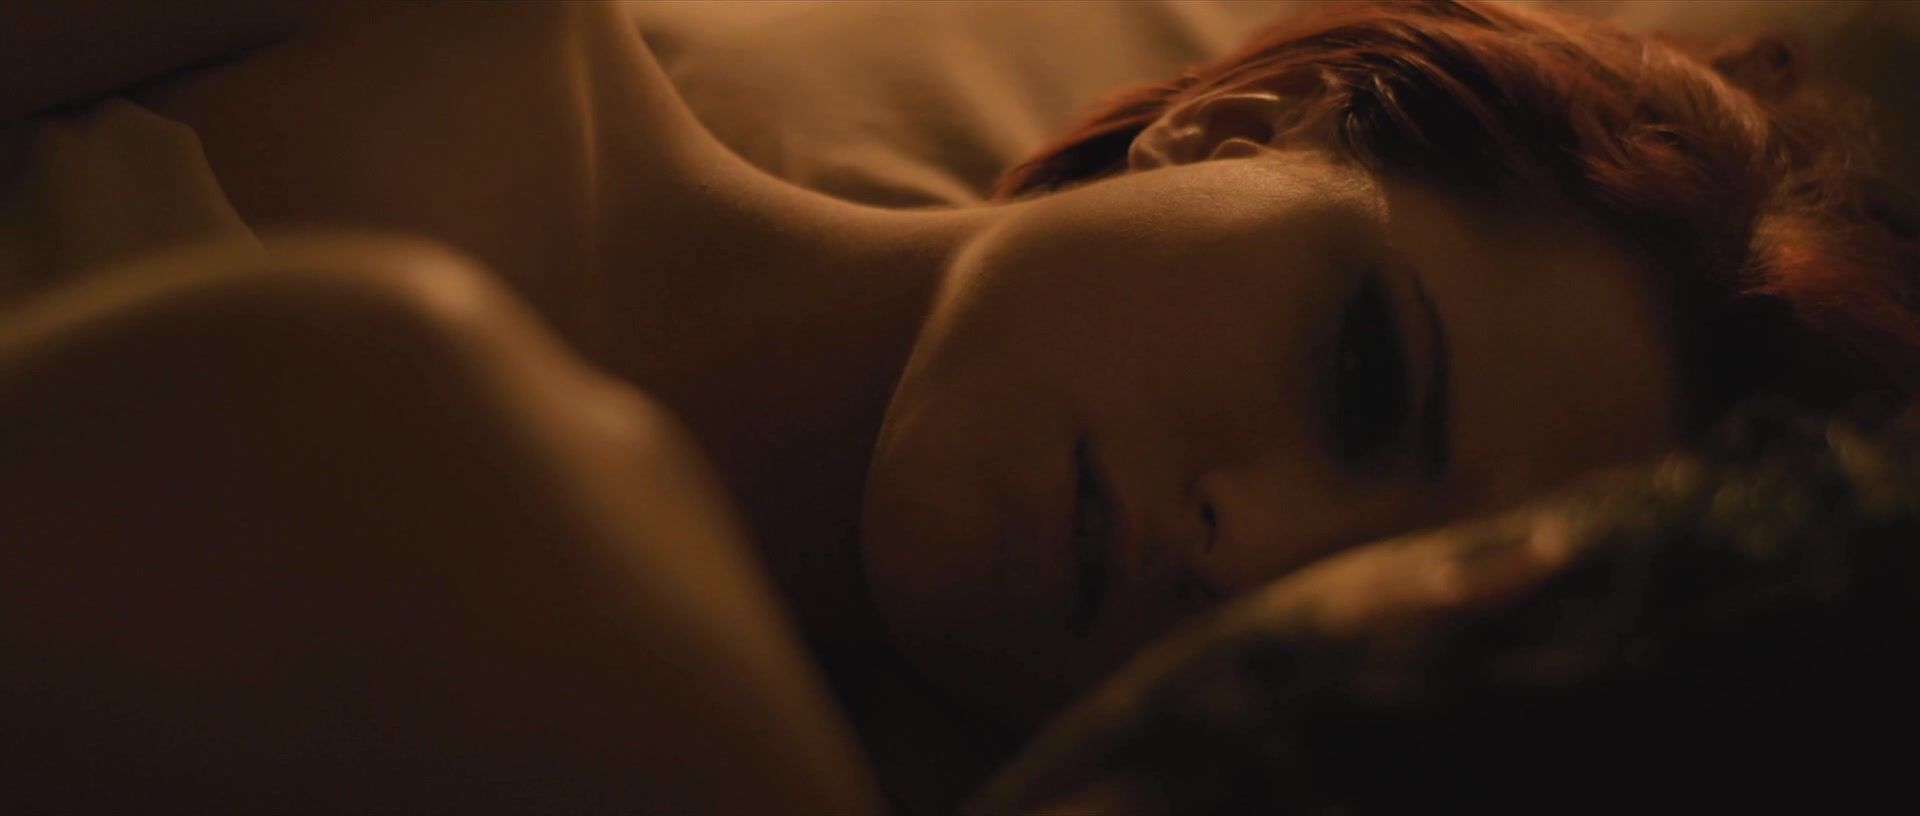 4some Evan Rachel Wood nude - The Necessary Death of Charlie Countryman (2013) Skin Diamond - 1